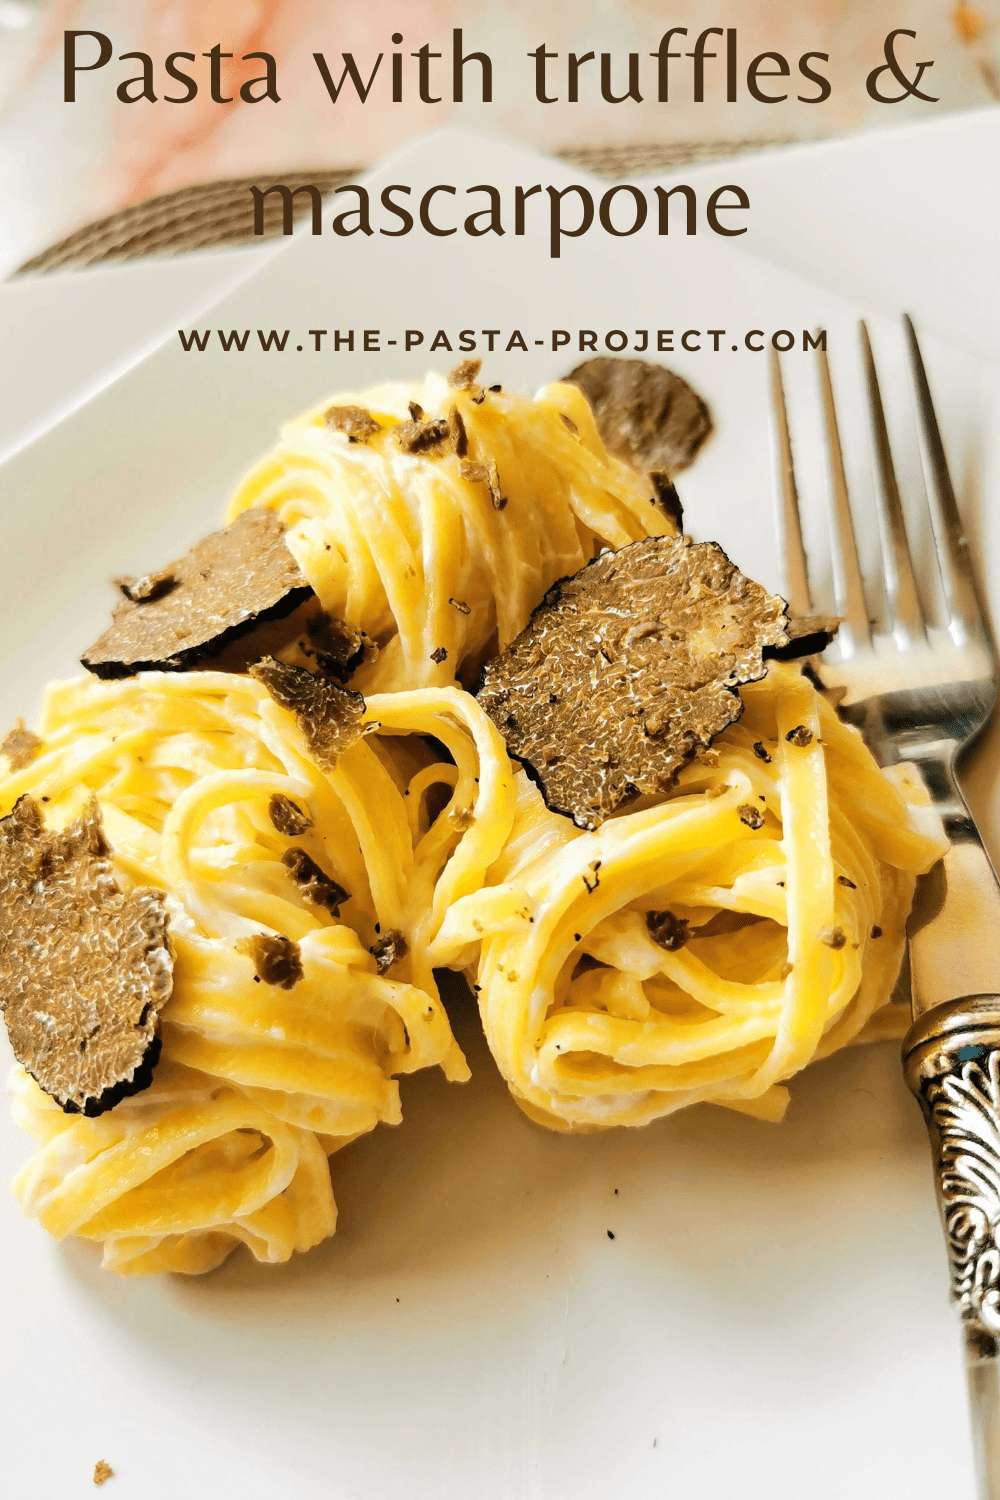 Pasta with truffles and mascarpone cream